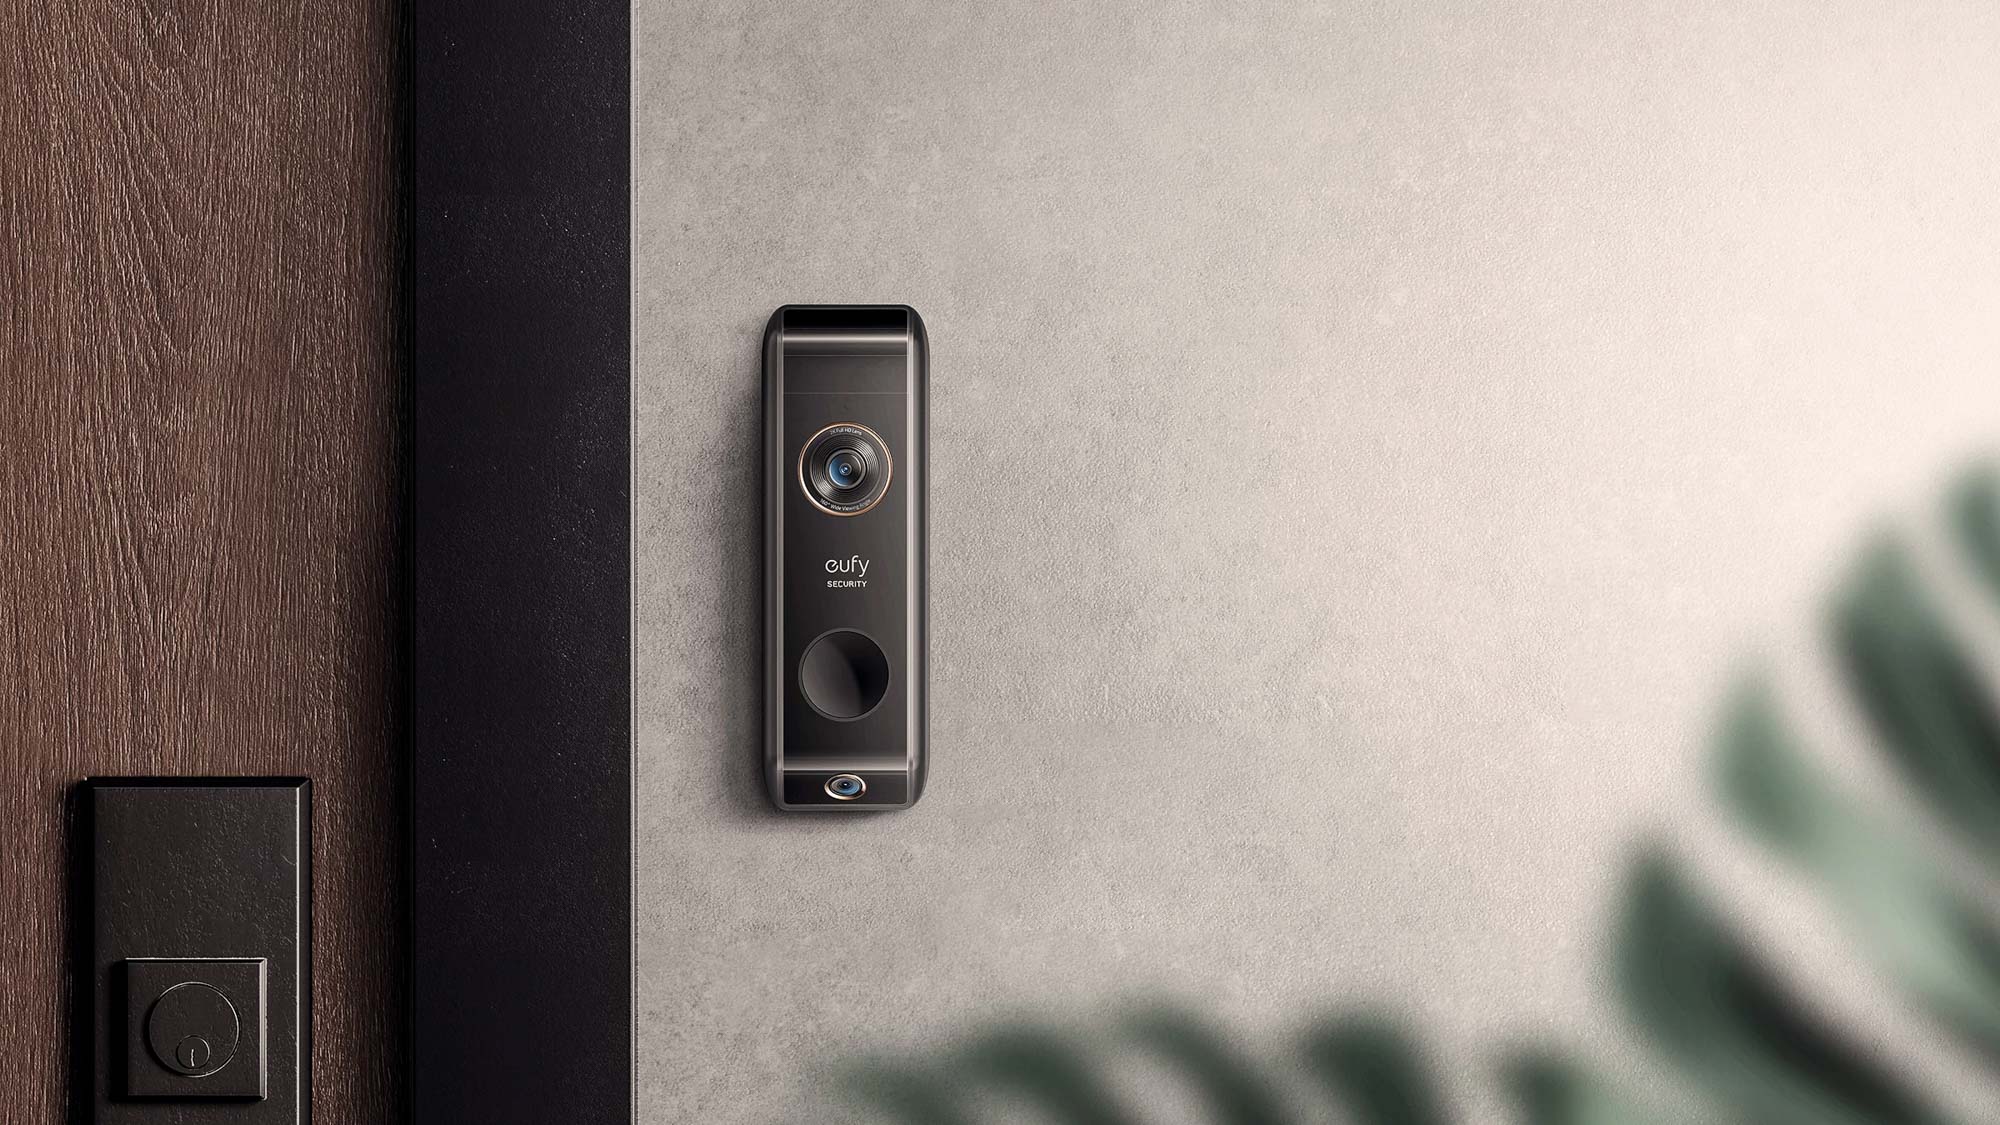 Eufy S330 Video Doorbell review: An innovative dual camera